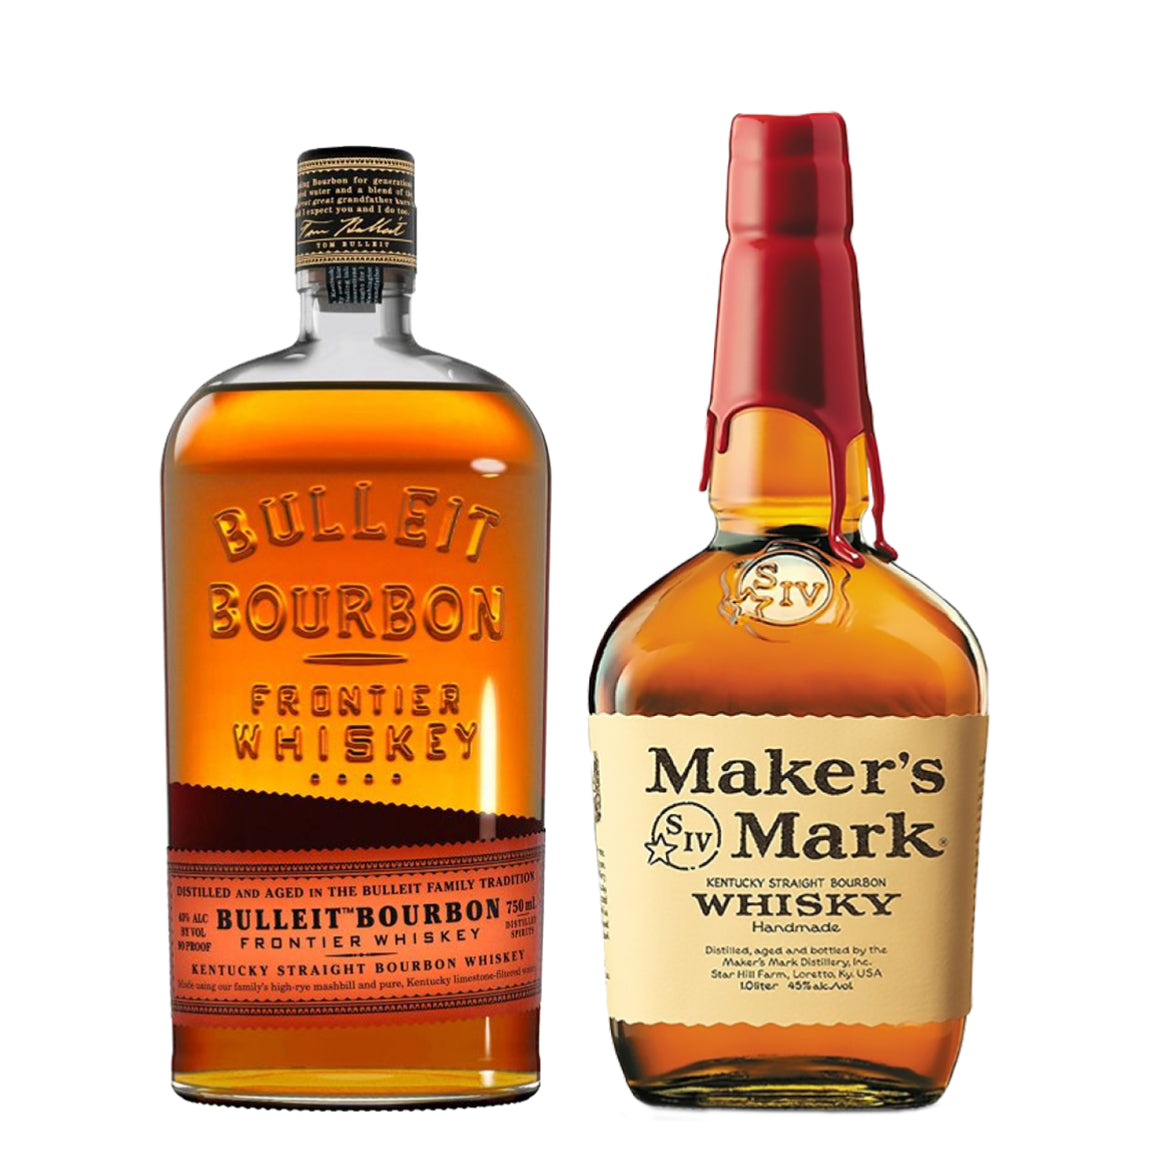 Makers Mark Whisky, Handmade, Kentucky Straight Bourbon - 750 ml